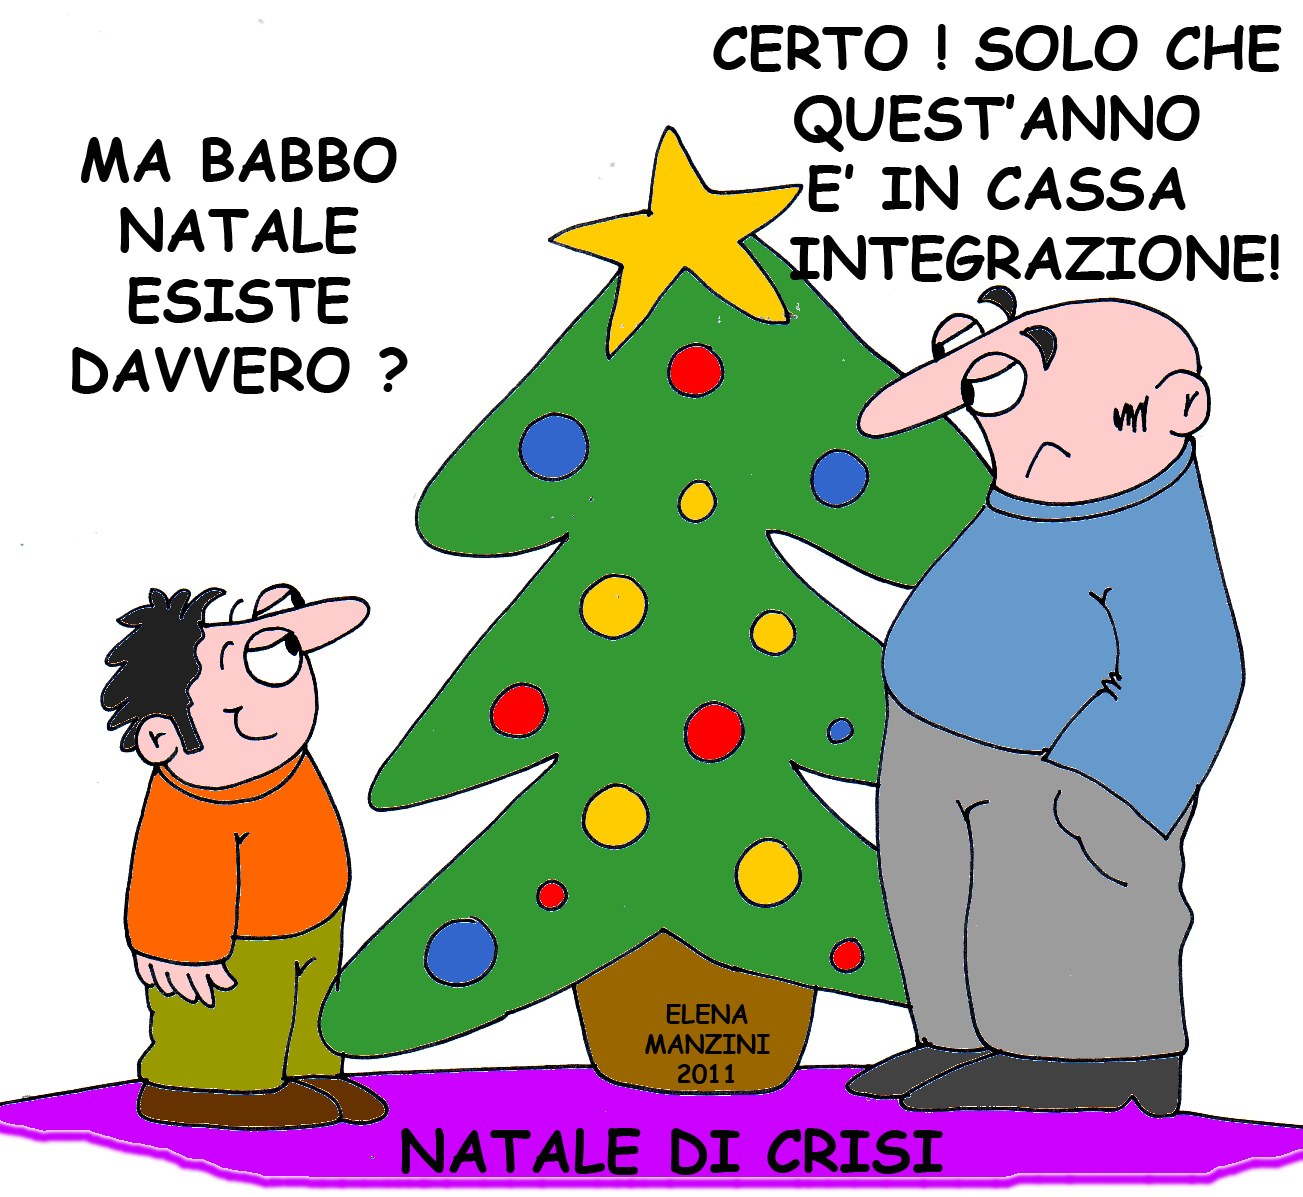 Vignetta di Elena Manzini - Natale 2011 Bis